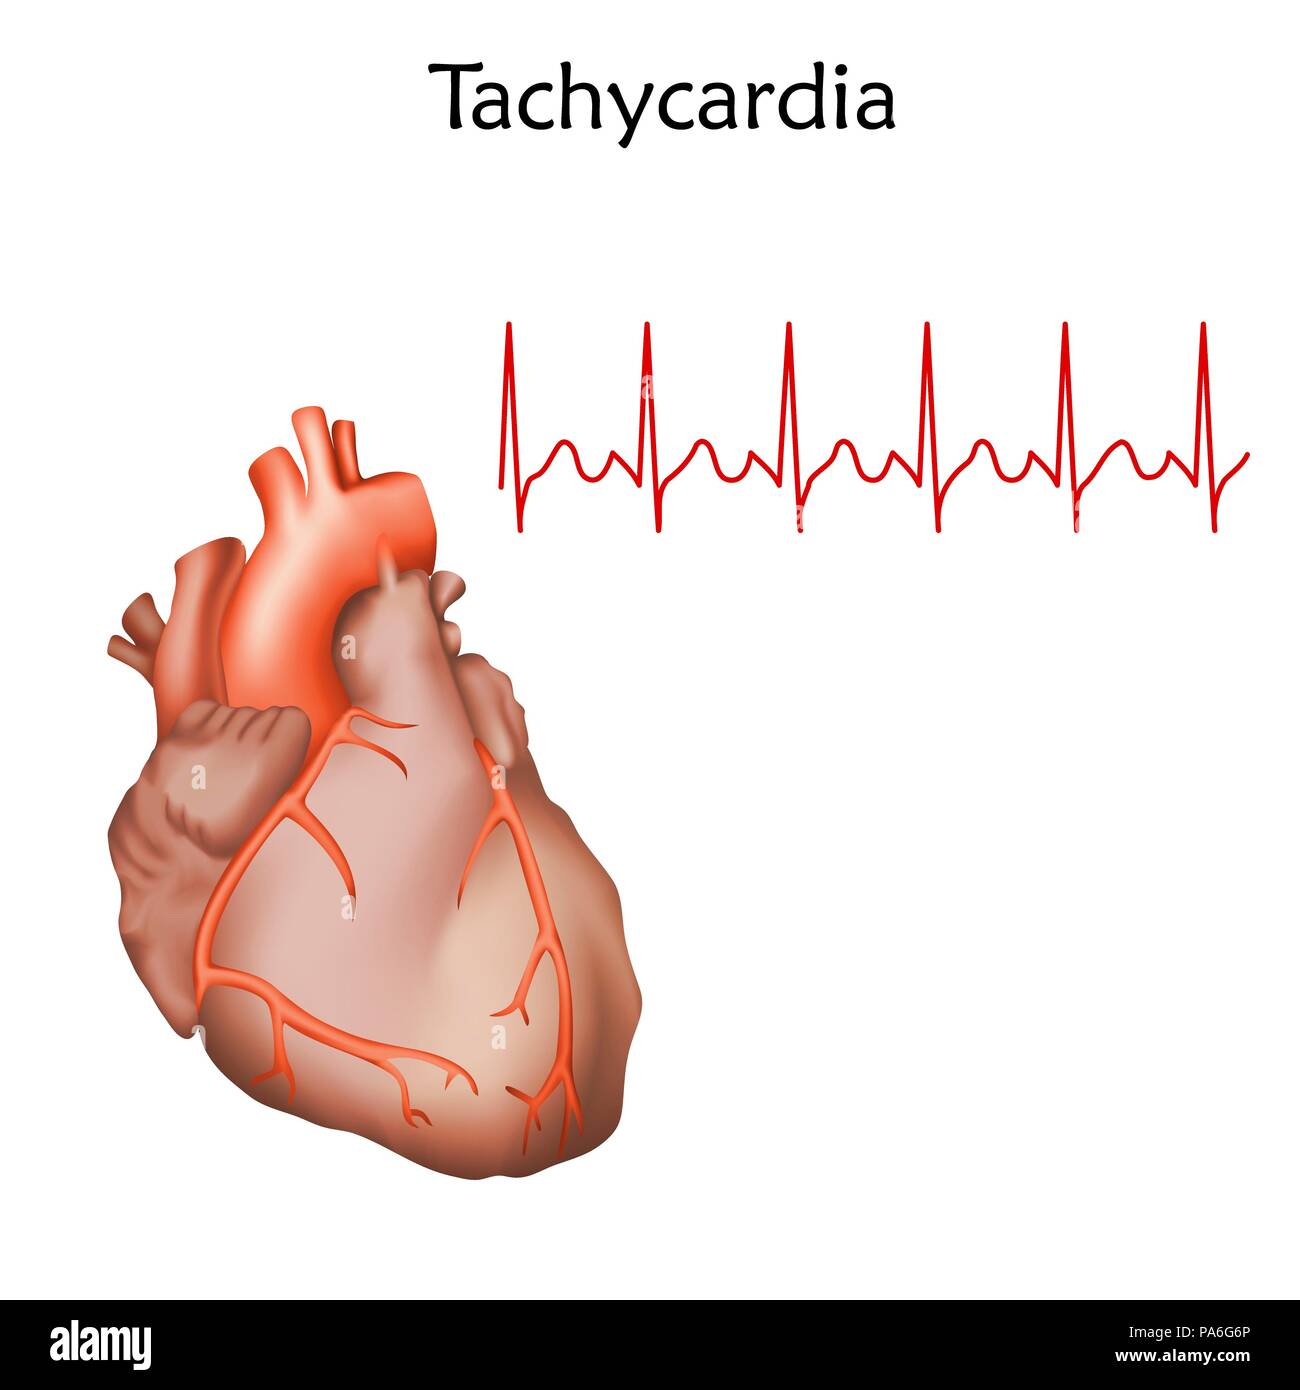  Tachycardia Illustration Stock Photo Alamy